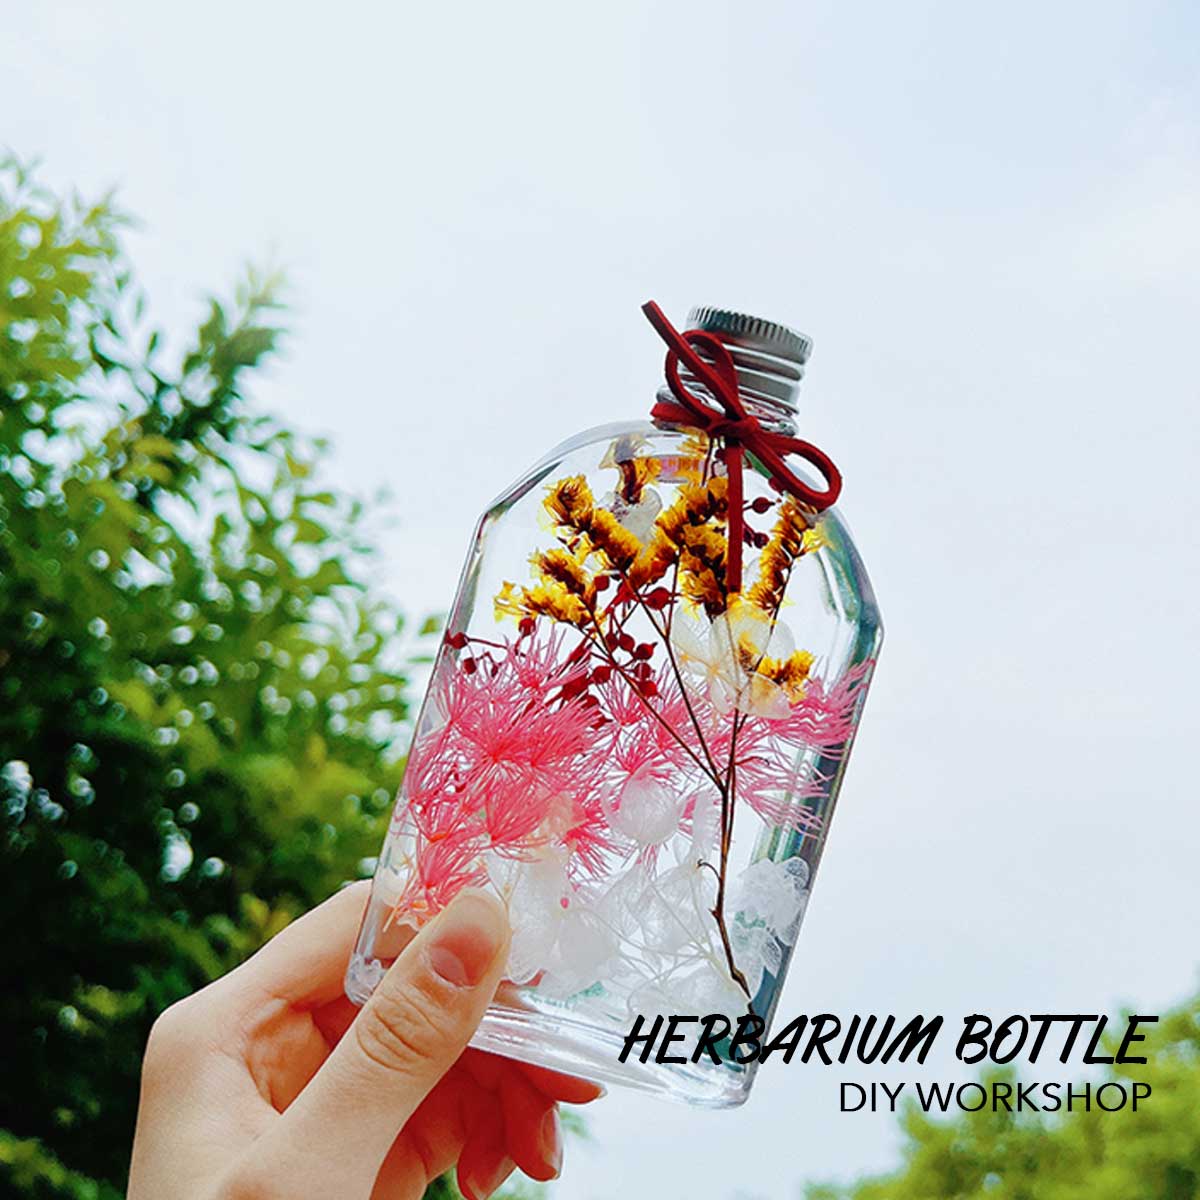 DIY浮游花草本瓶工作坊 How about DIY Herbarium Bottle